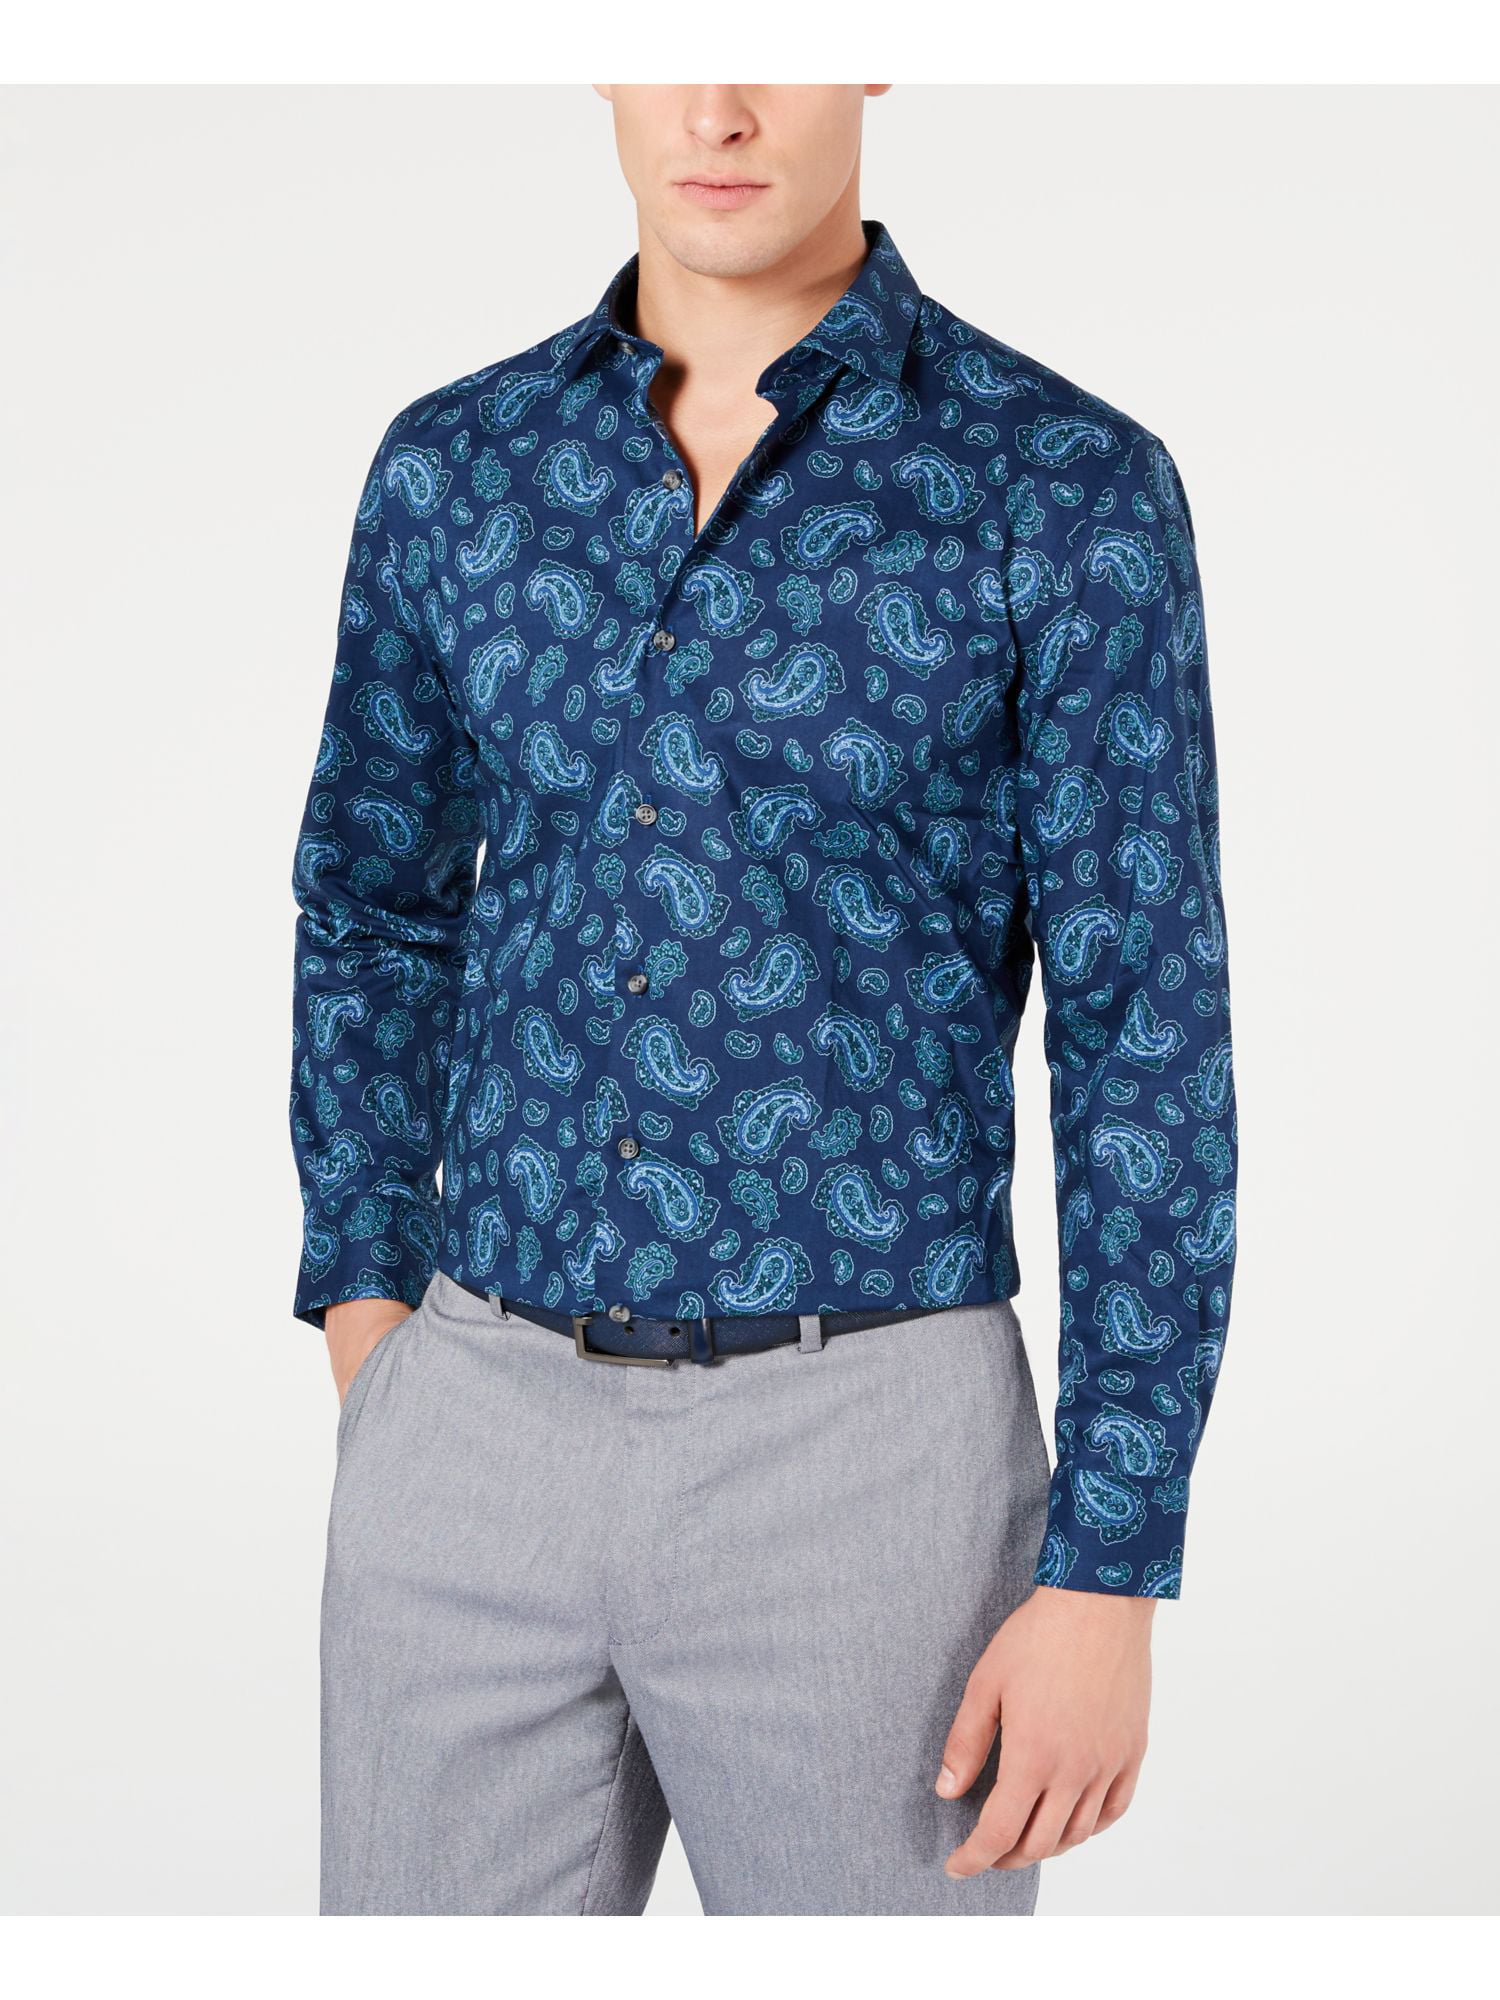 WULFUL Men Casual Long Sleeve Dress Shirt Print Collar Regular Fit Button Down Shirts